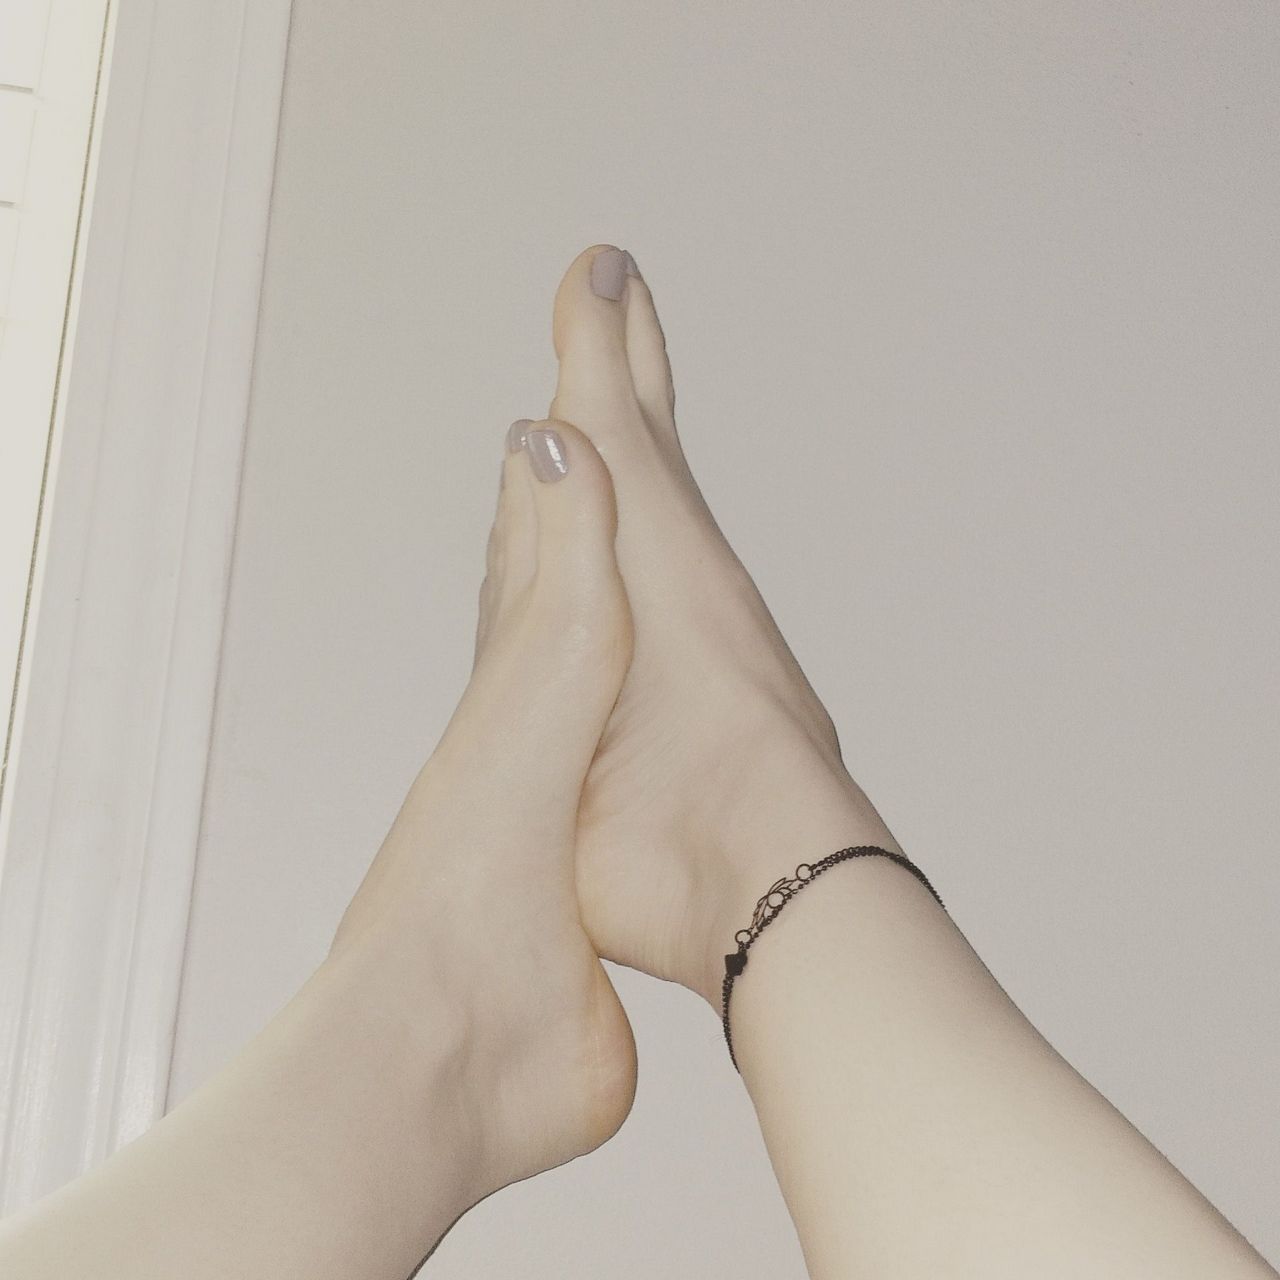 Scarletrenee Cutte Feet And Long Legs